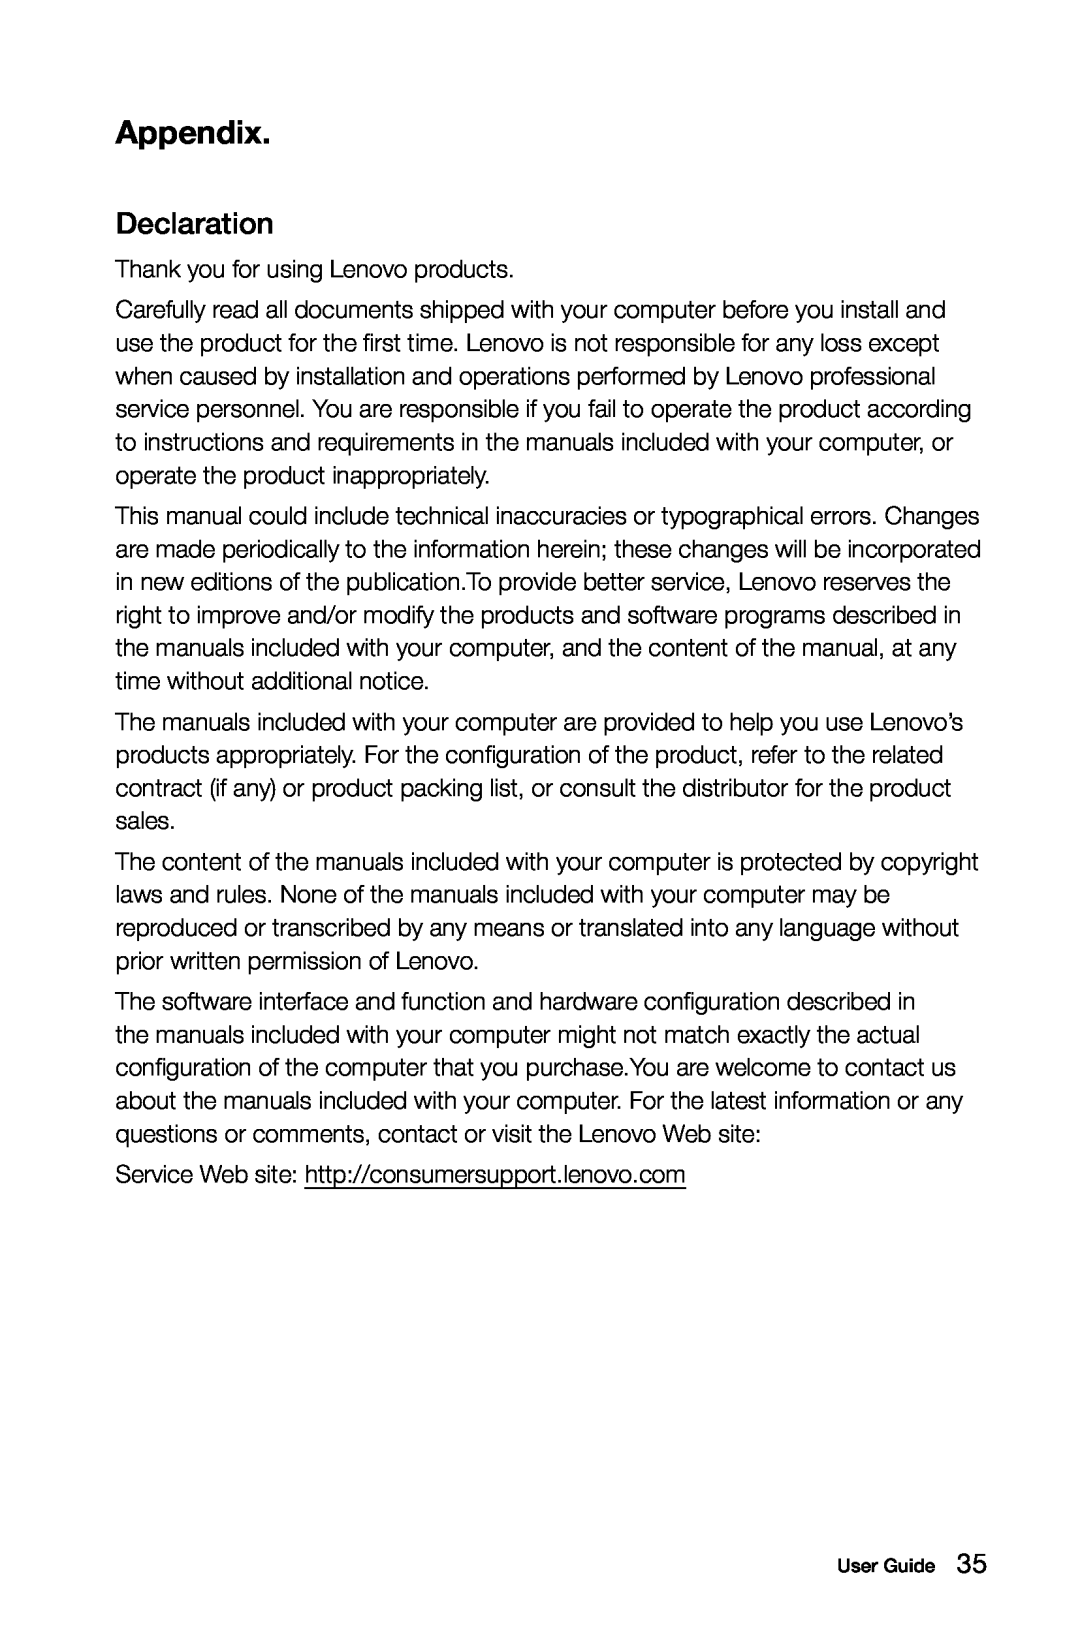 Lenovo H5S manual Appendix, Declaration 